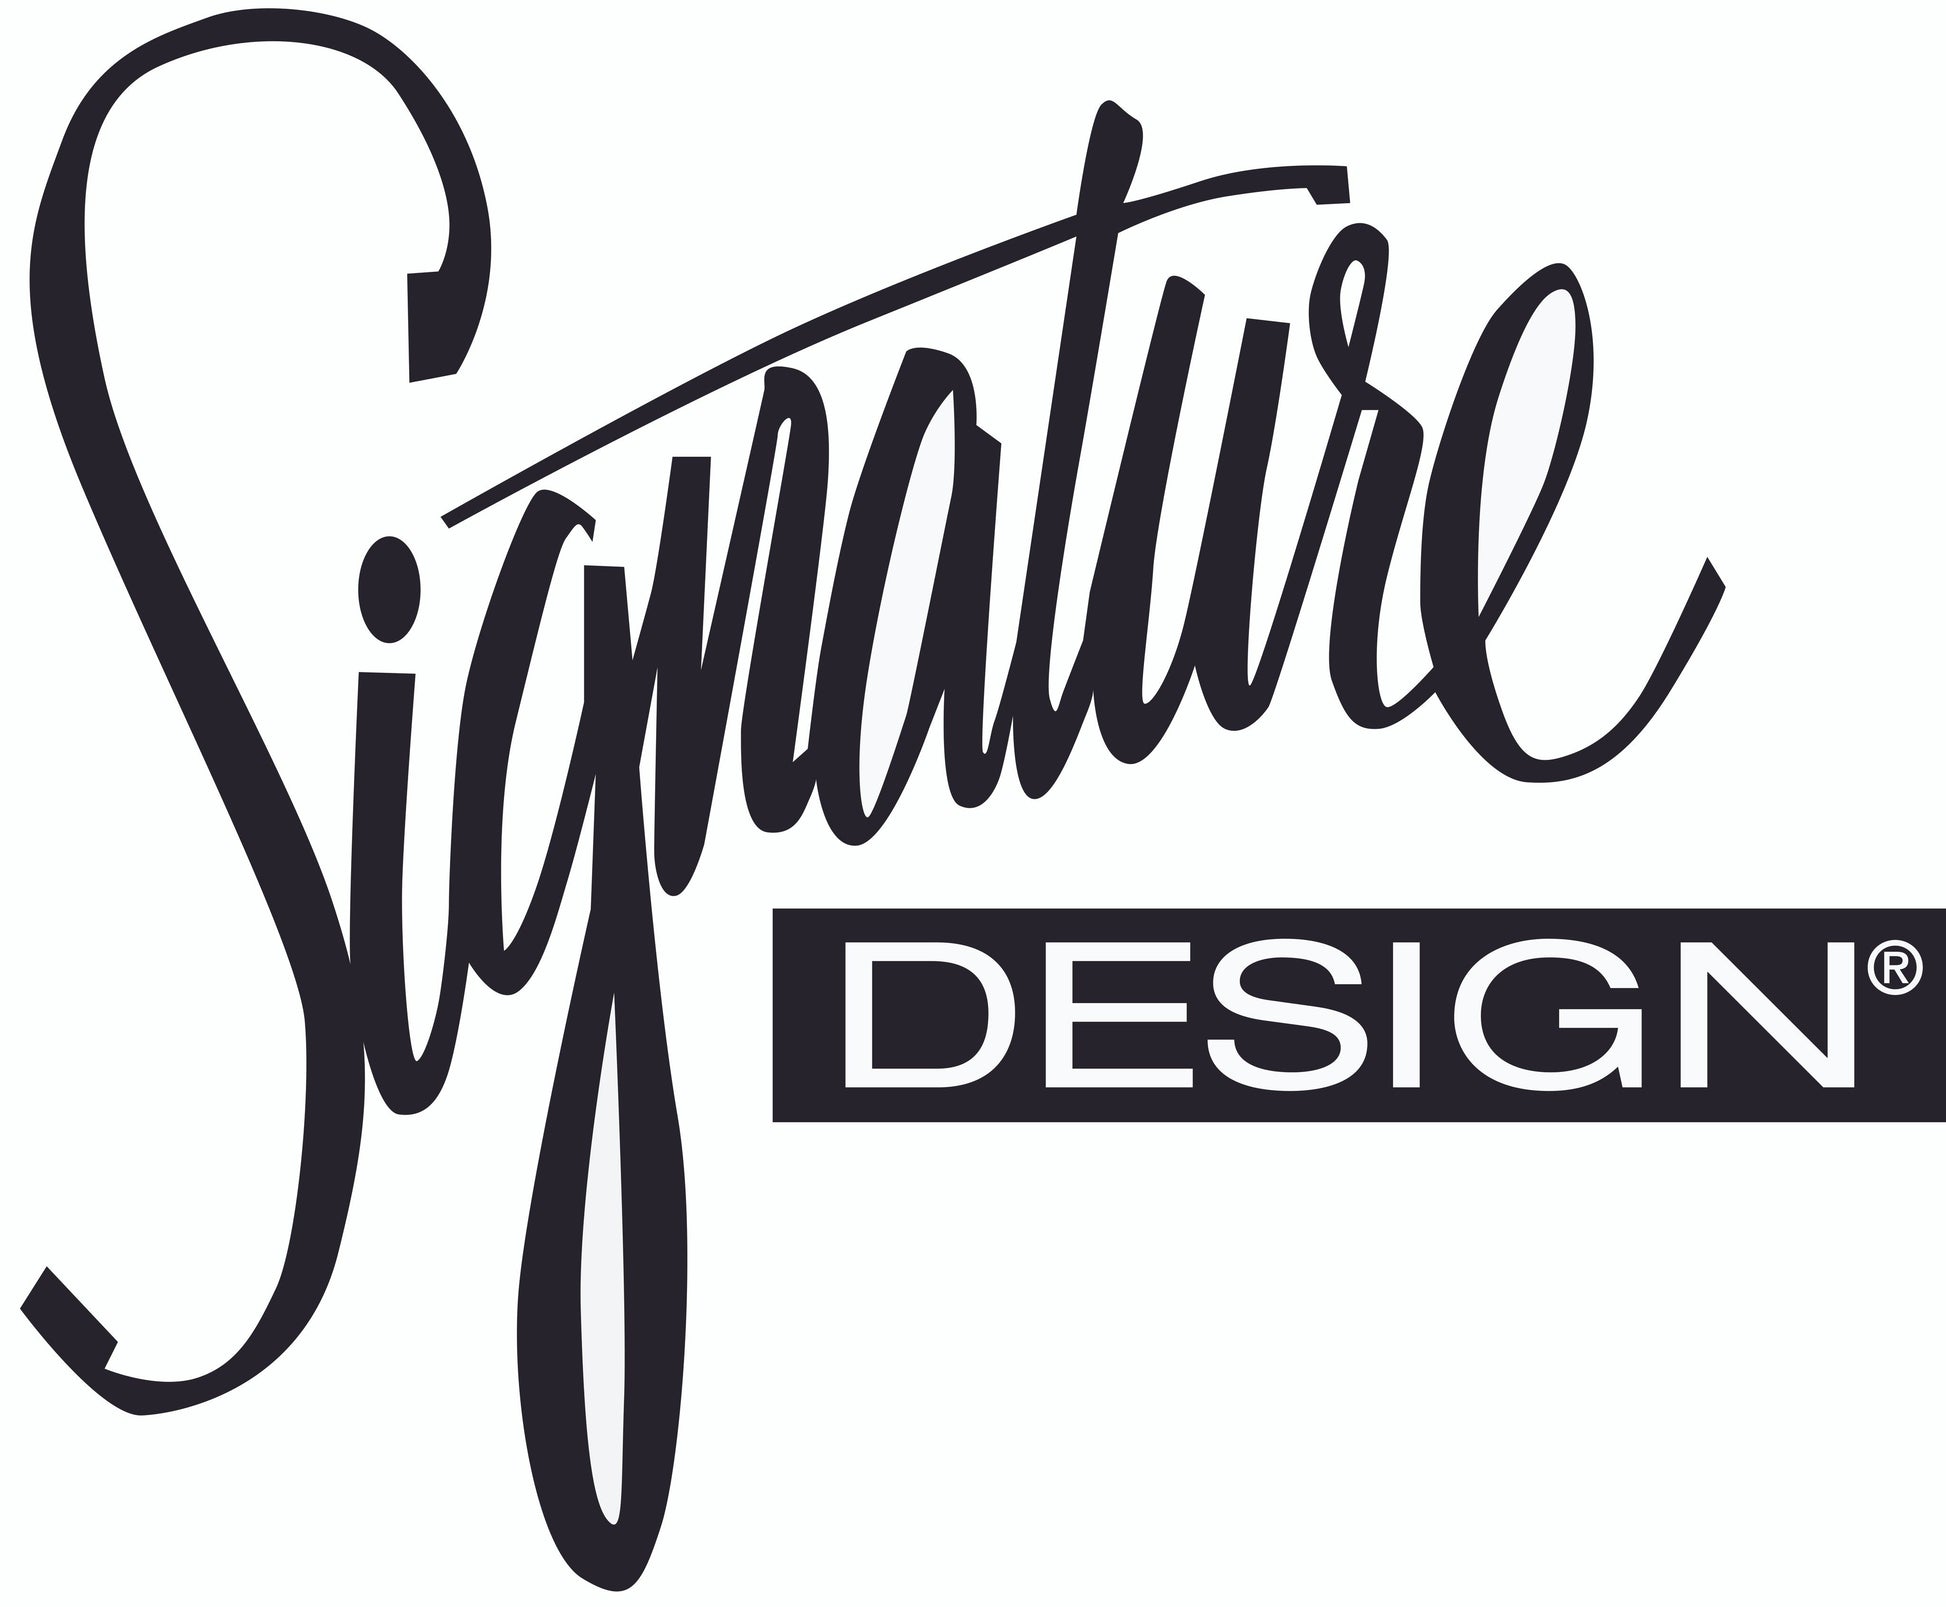 Abanson Metal Desk Lamp (1/CN) Signature Design by Ashley®